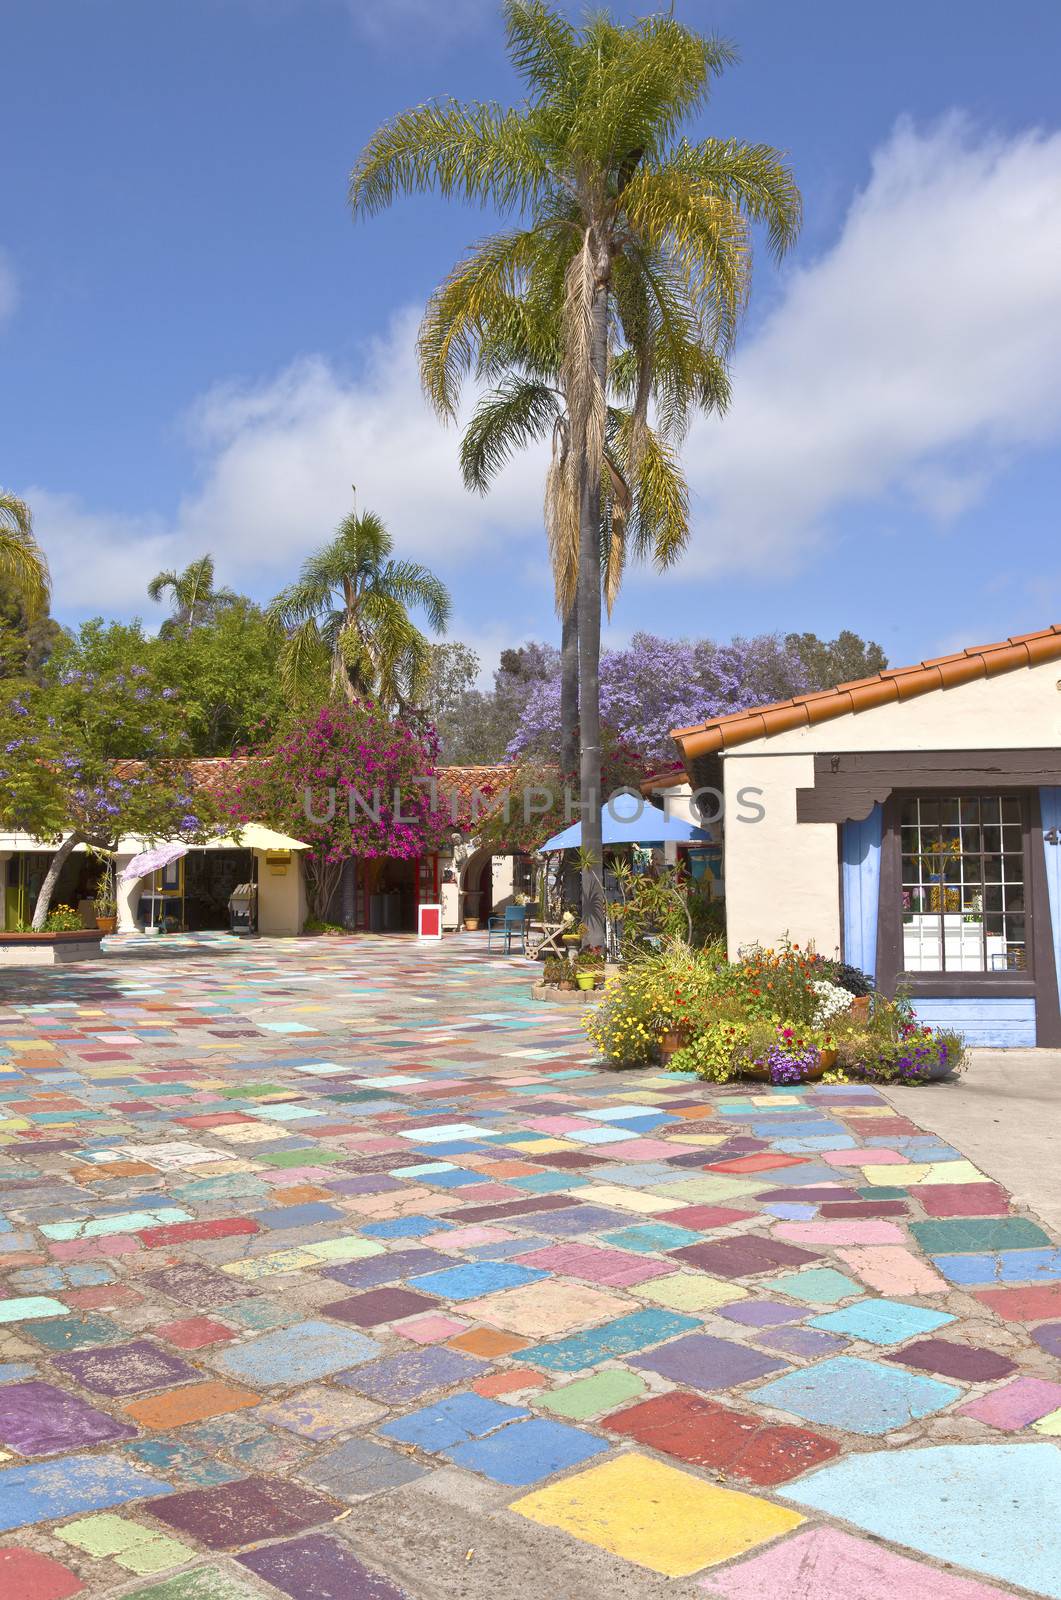 Spanish Village in Balboa Park art and craft exhibits San Diego California.